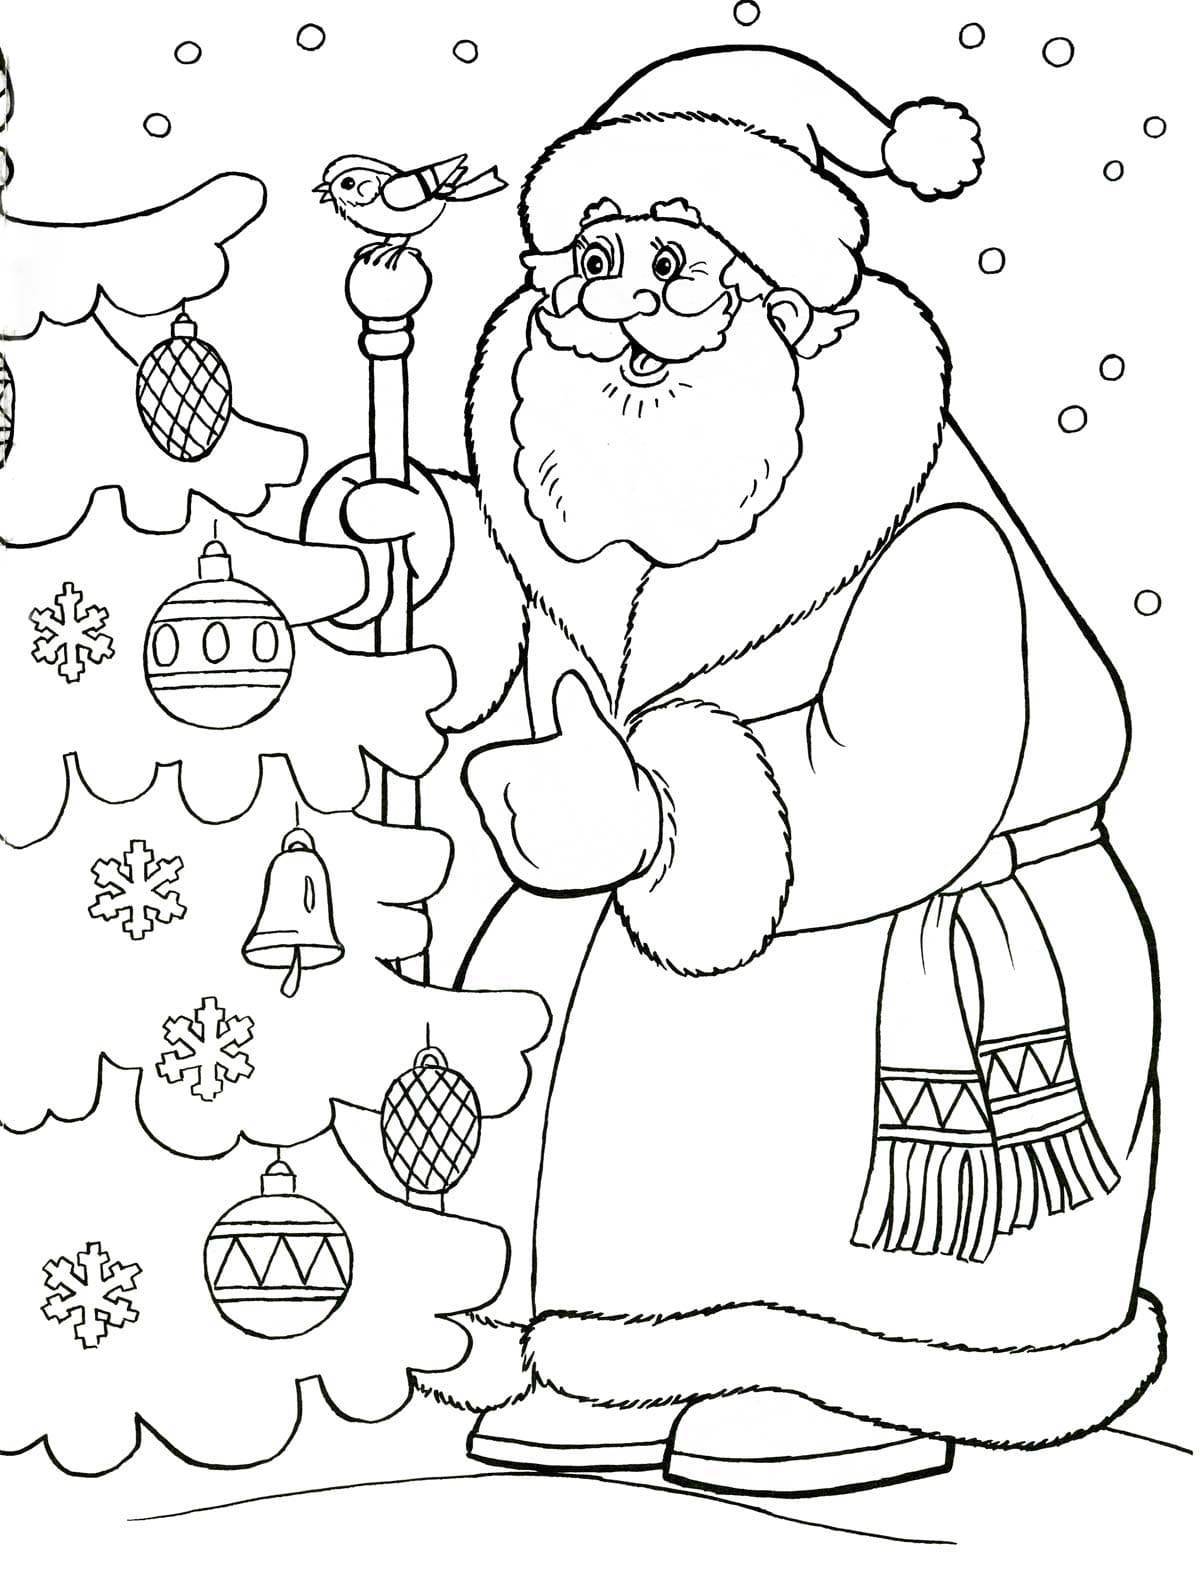 Coloring page amazing santa claus